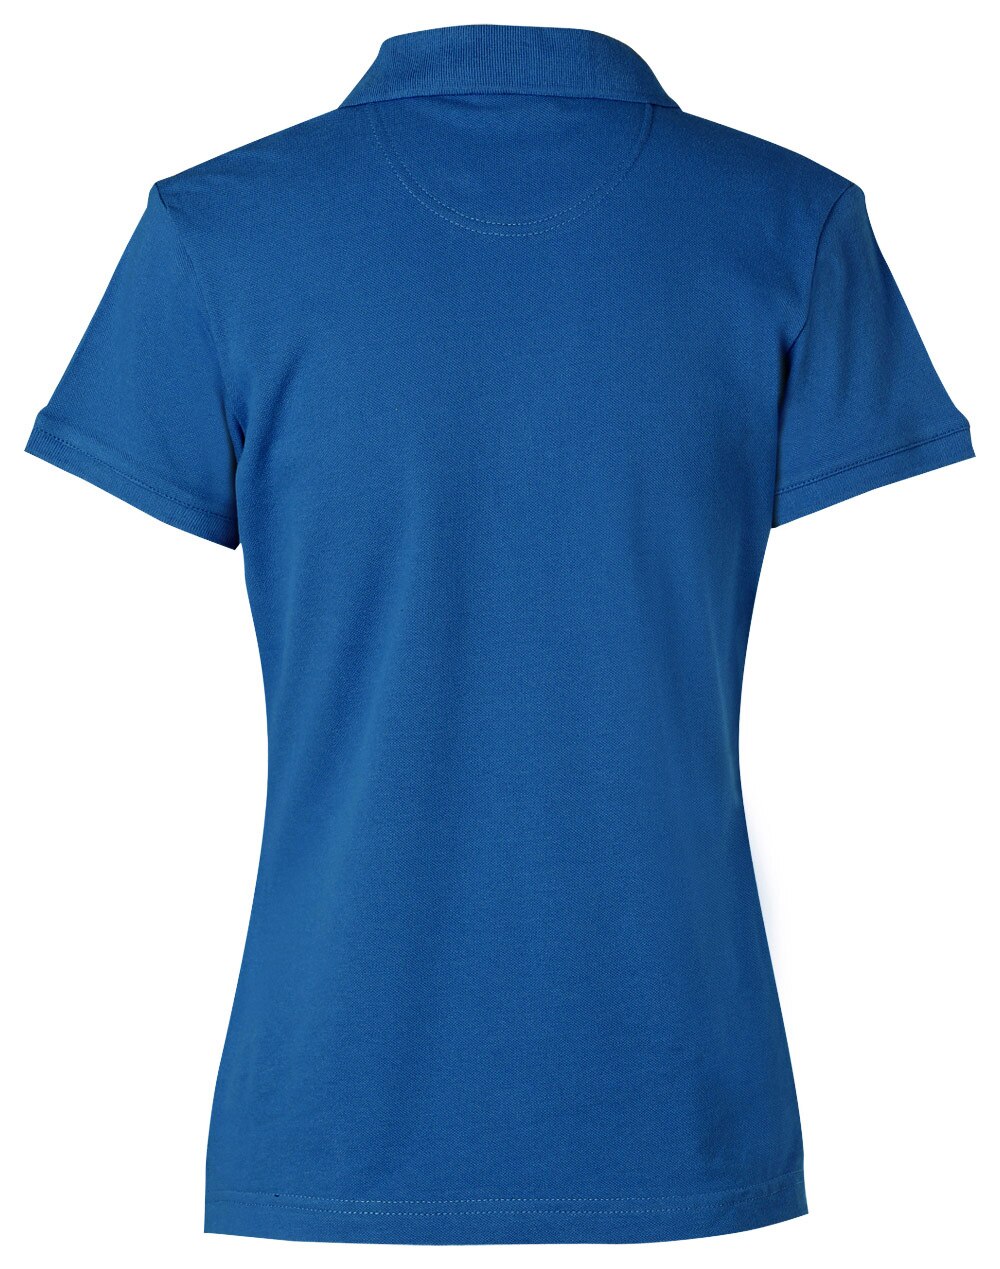 Custom Cotton (Spring Blue) Long Beach Ledies Polo Shirts Online Perth Australia